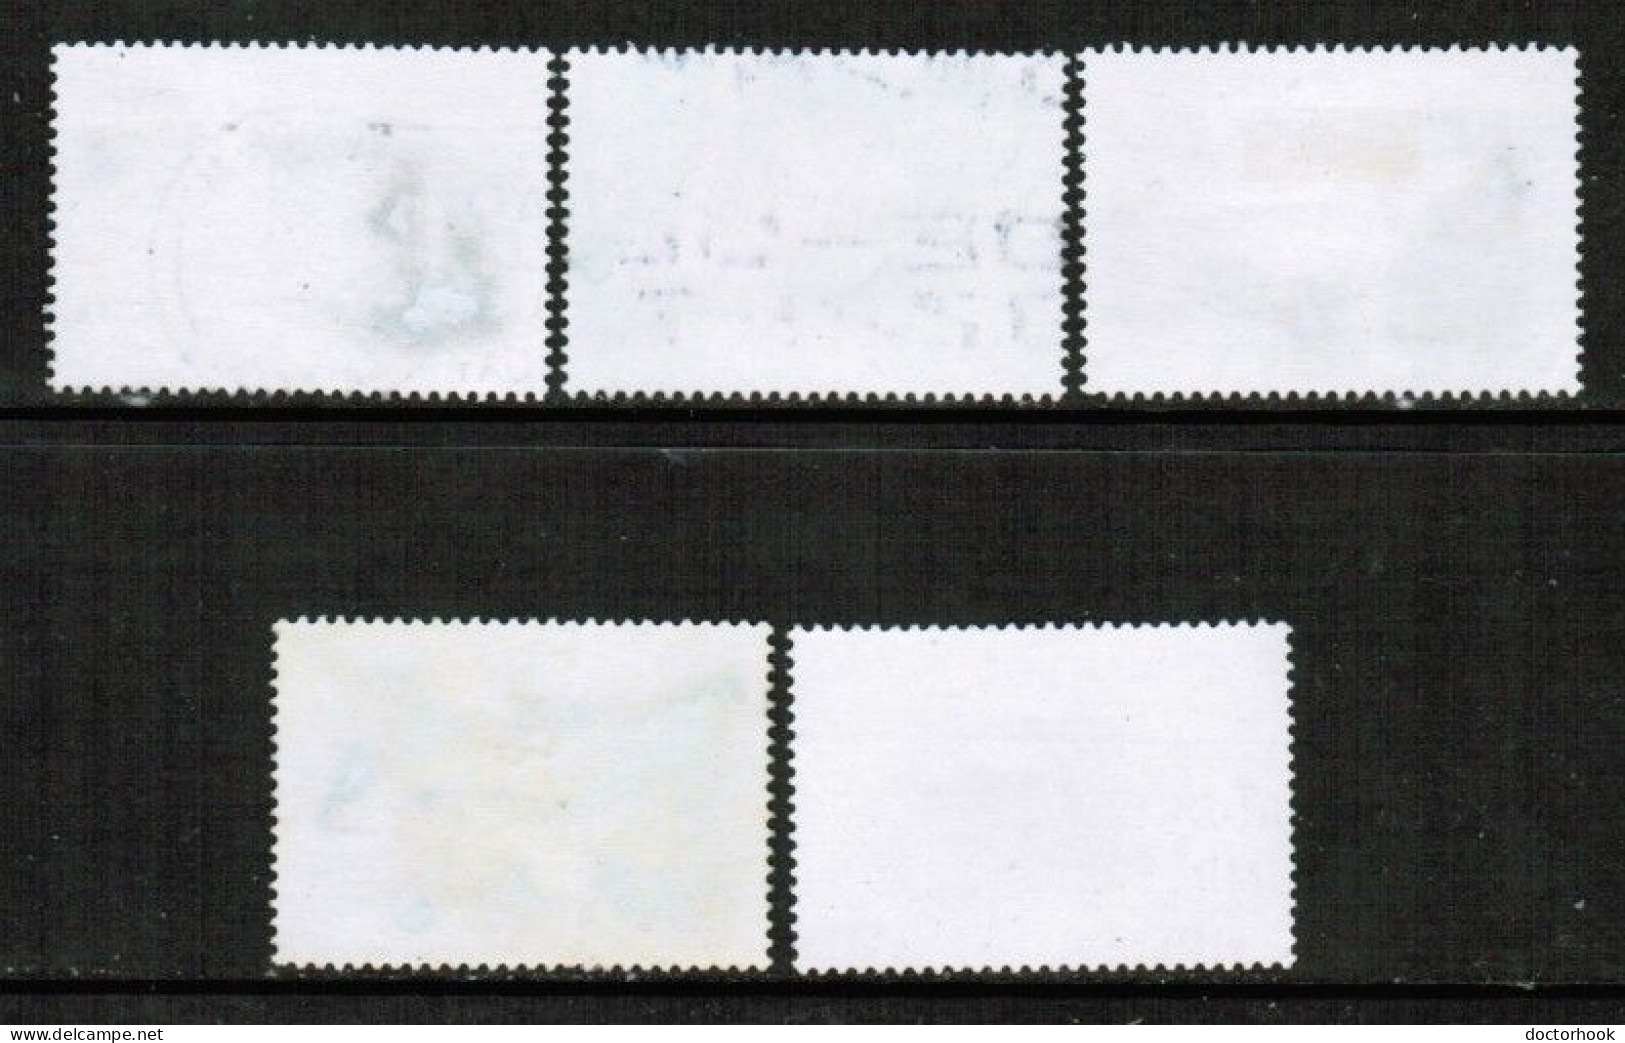 AUSTRALIAN ANTARCTIC TERRITORY   Scott # L 102-6 USED (CONDITION AS PER SCAN) (Stamp Scan # 929-9) - Gebruikt